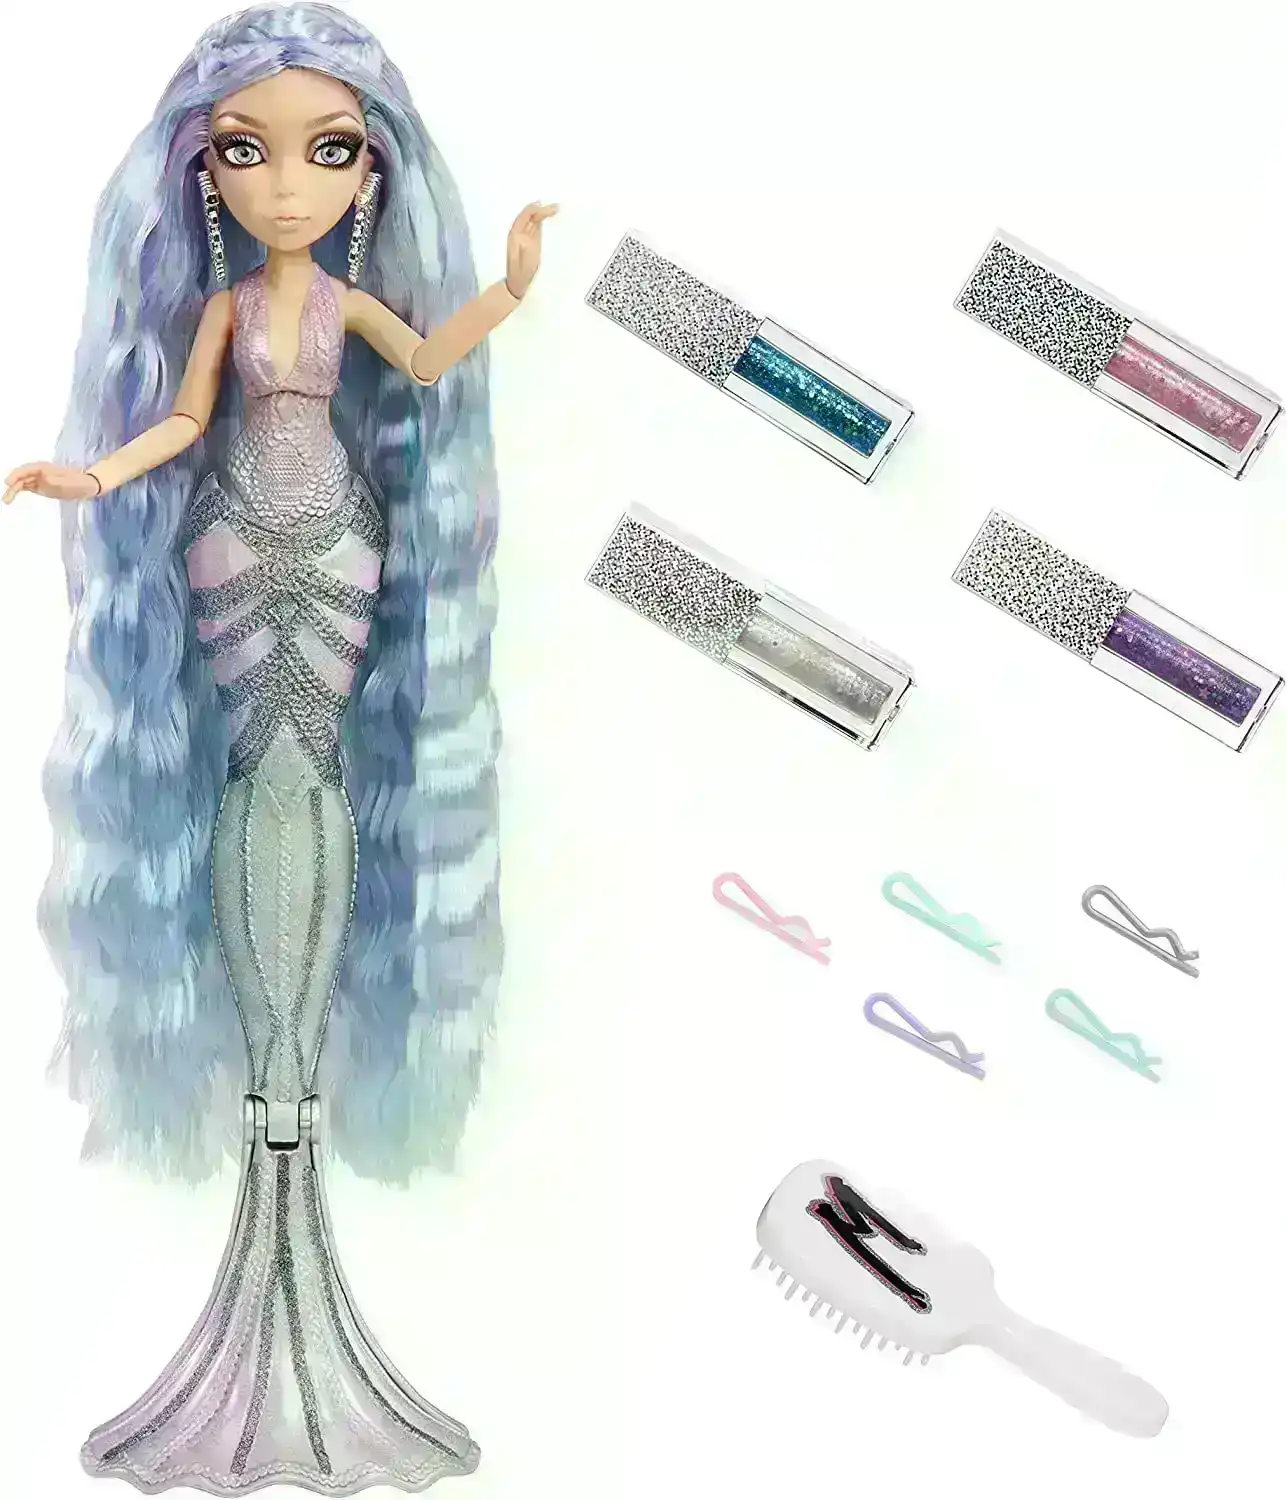 Mermaze Mermaidz Riviera Mermaid Fashion Doll L.O.L. Surprise! New